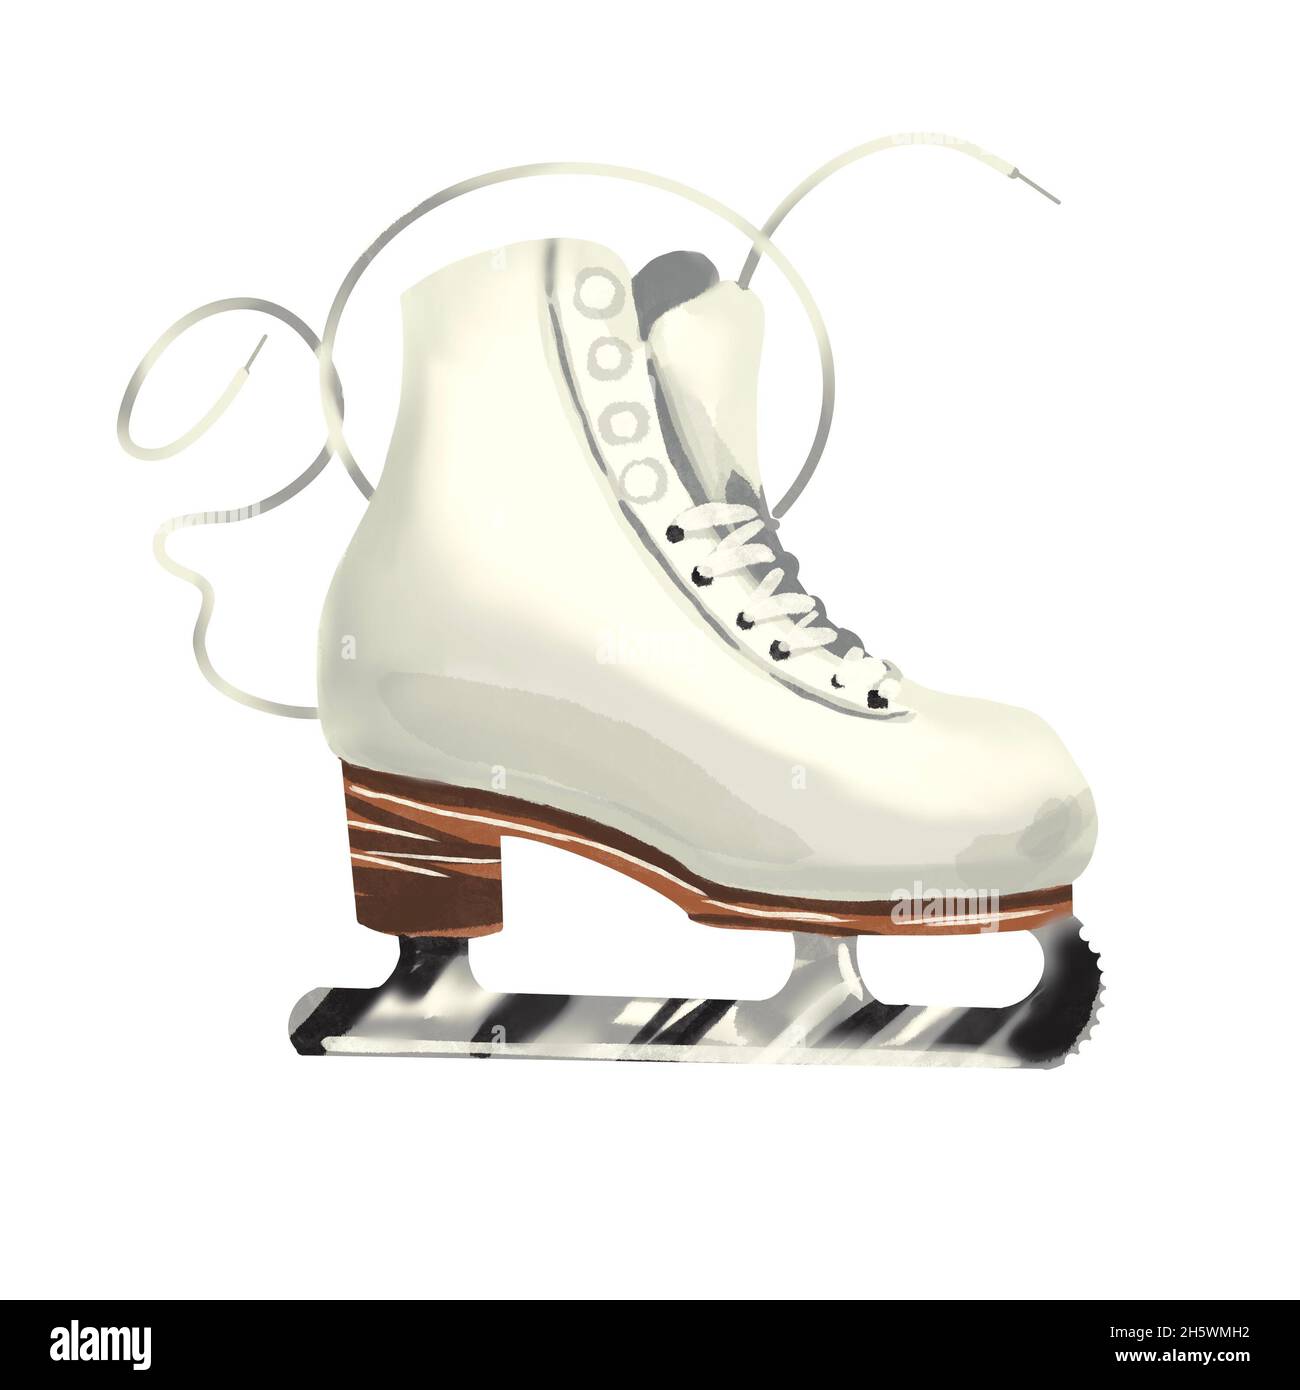 Watercolor skates for ice skating. Winter decor Stock Photo